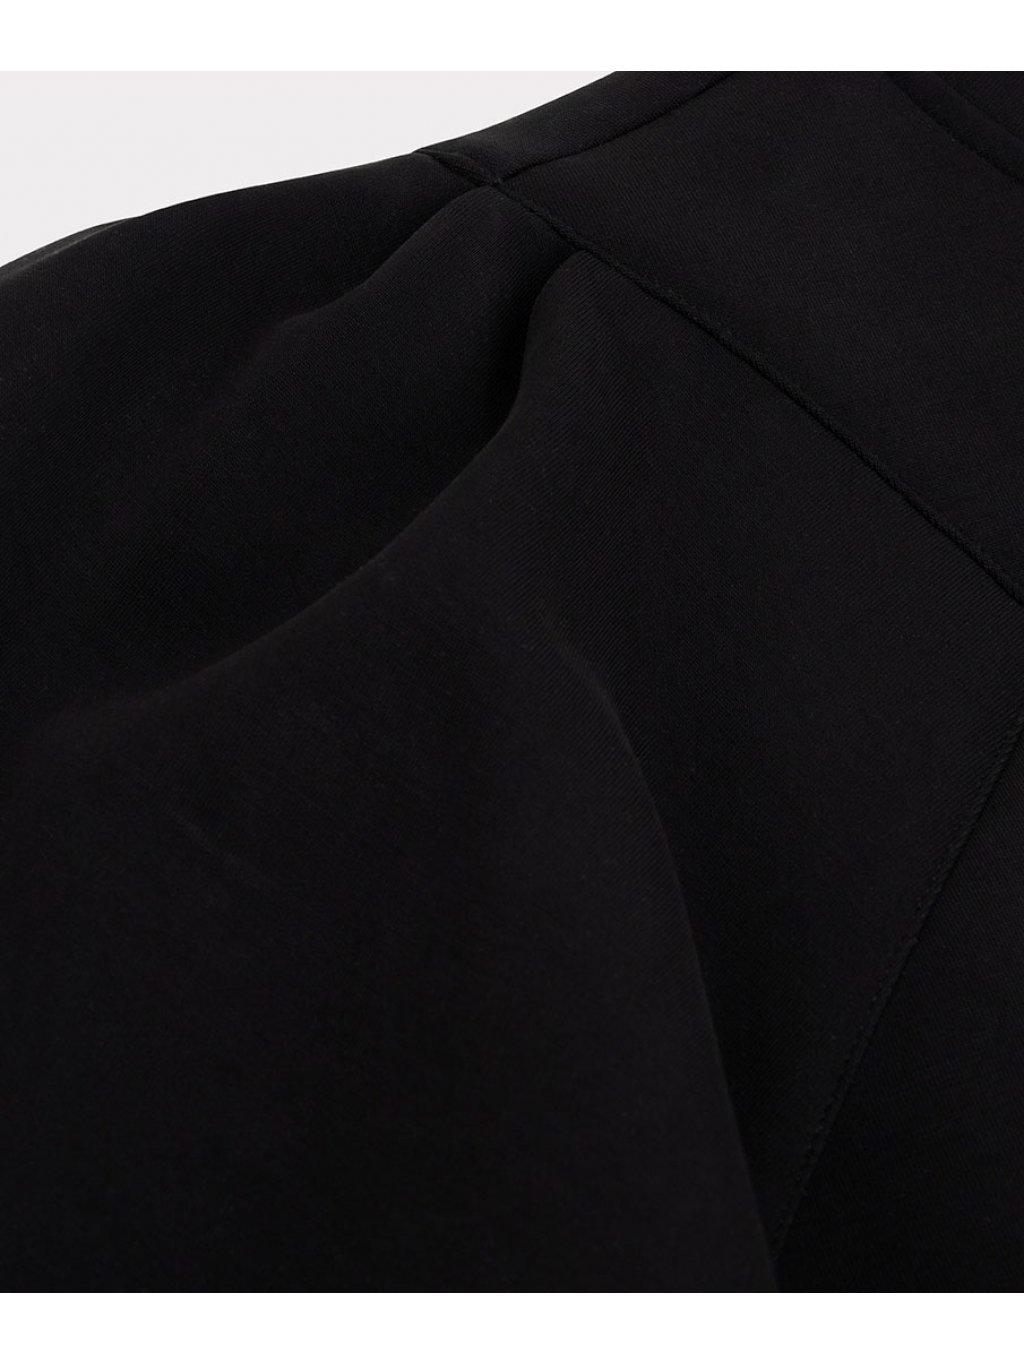 Šaty Esqualo 5513 černé neoprenové